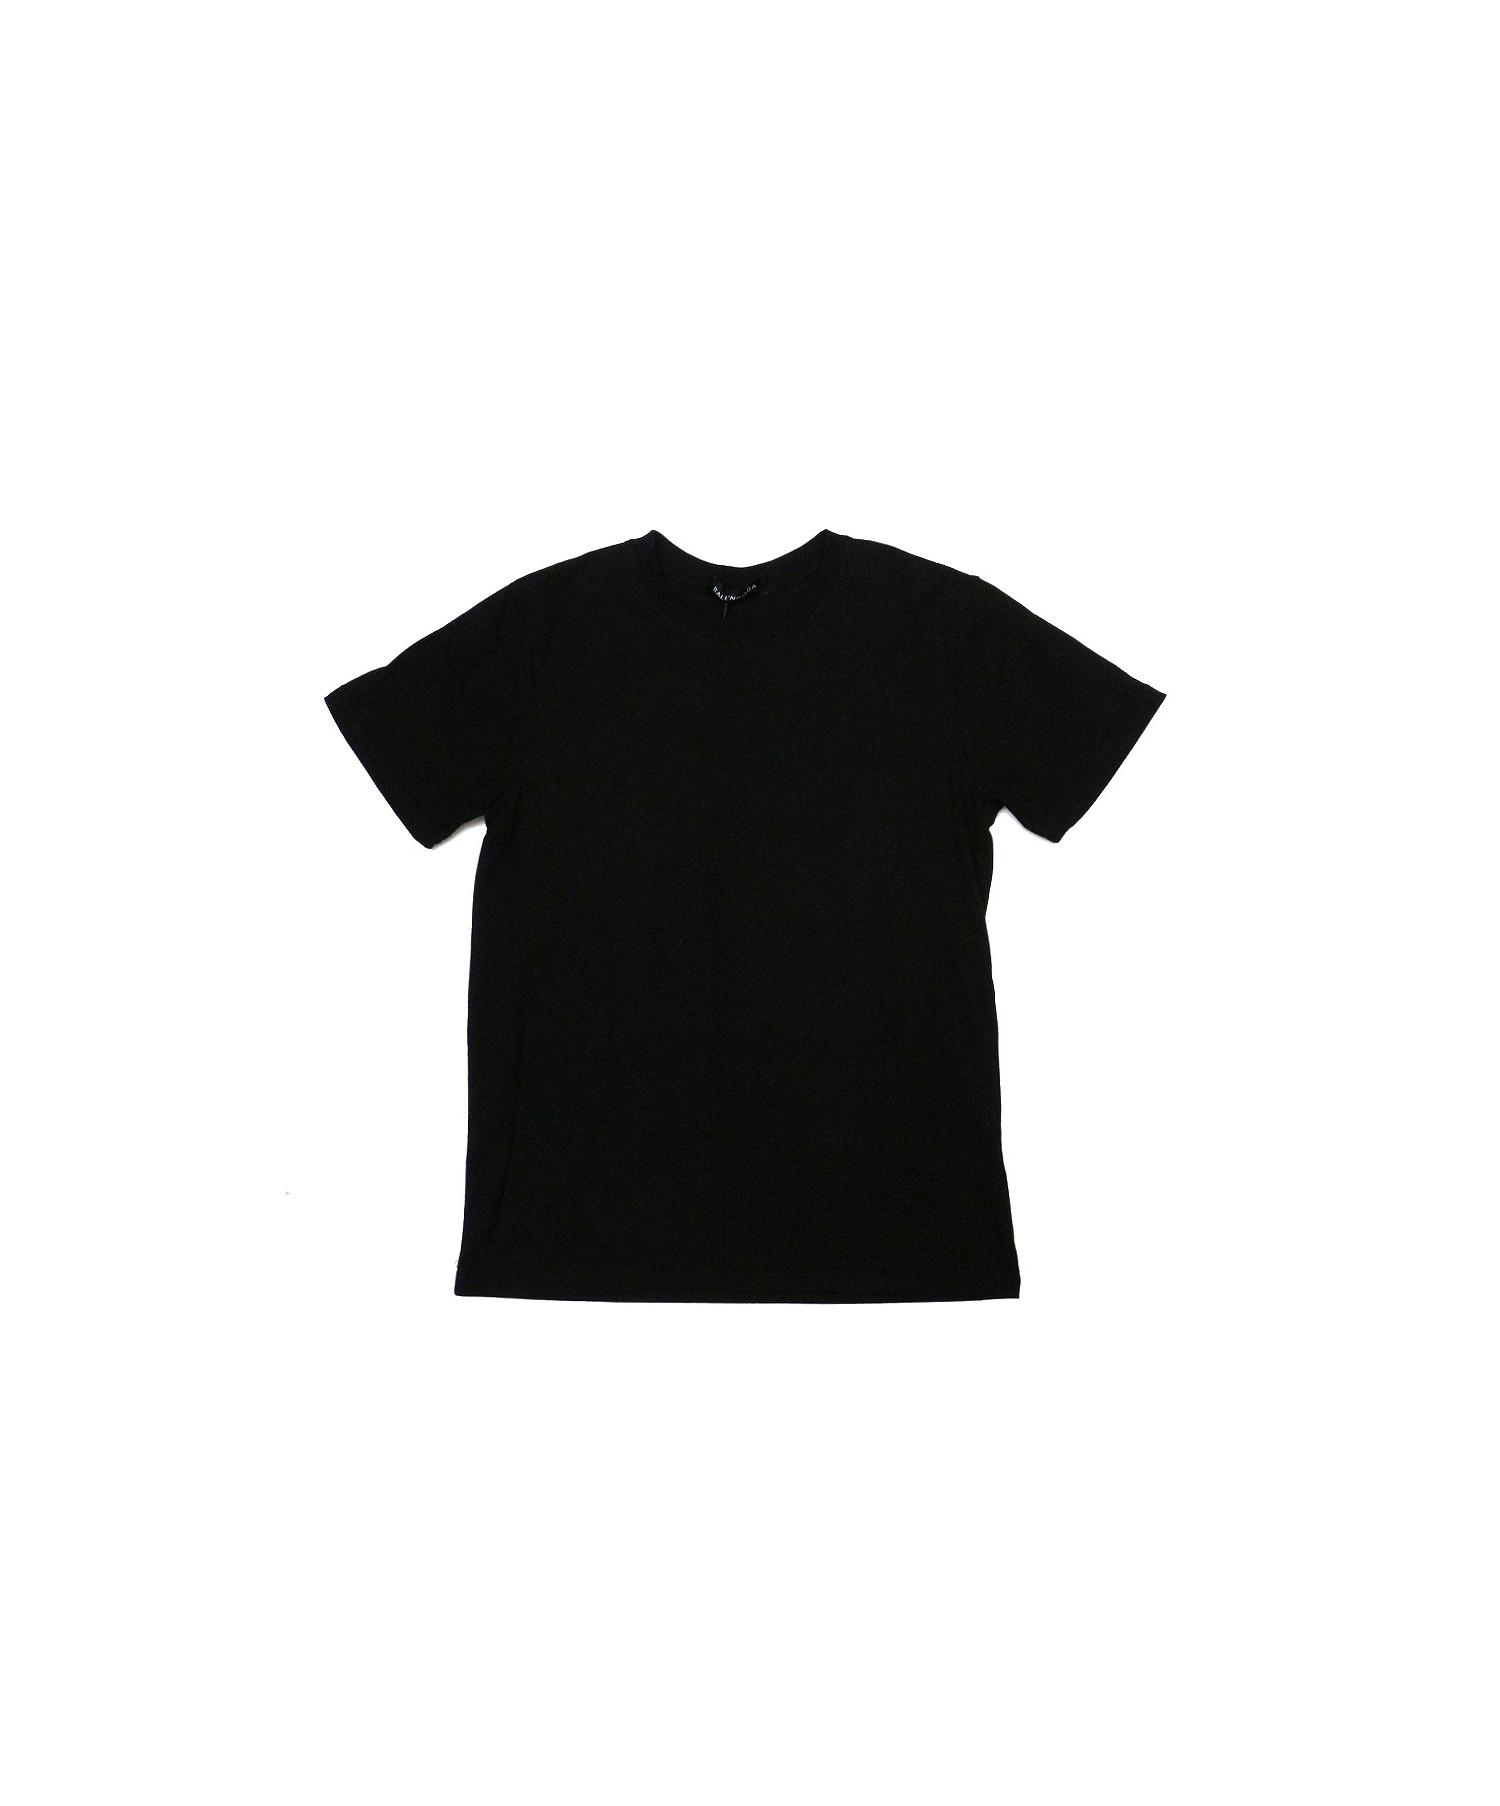 BALENCIAGA (バレンジアガ) バックプリントTシャツ サイズ:SIZE M